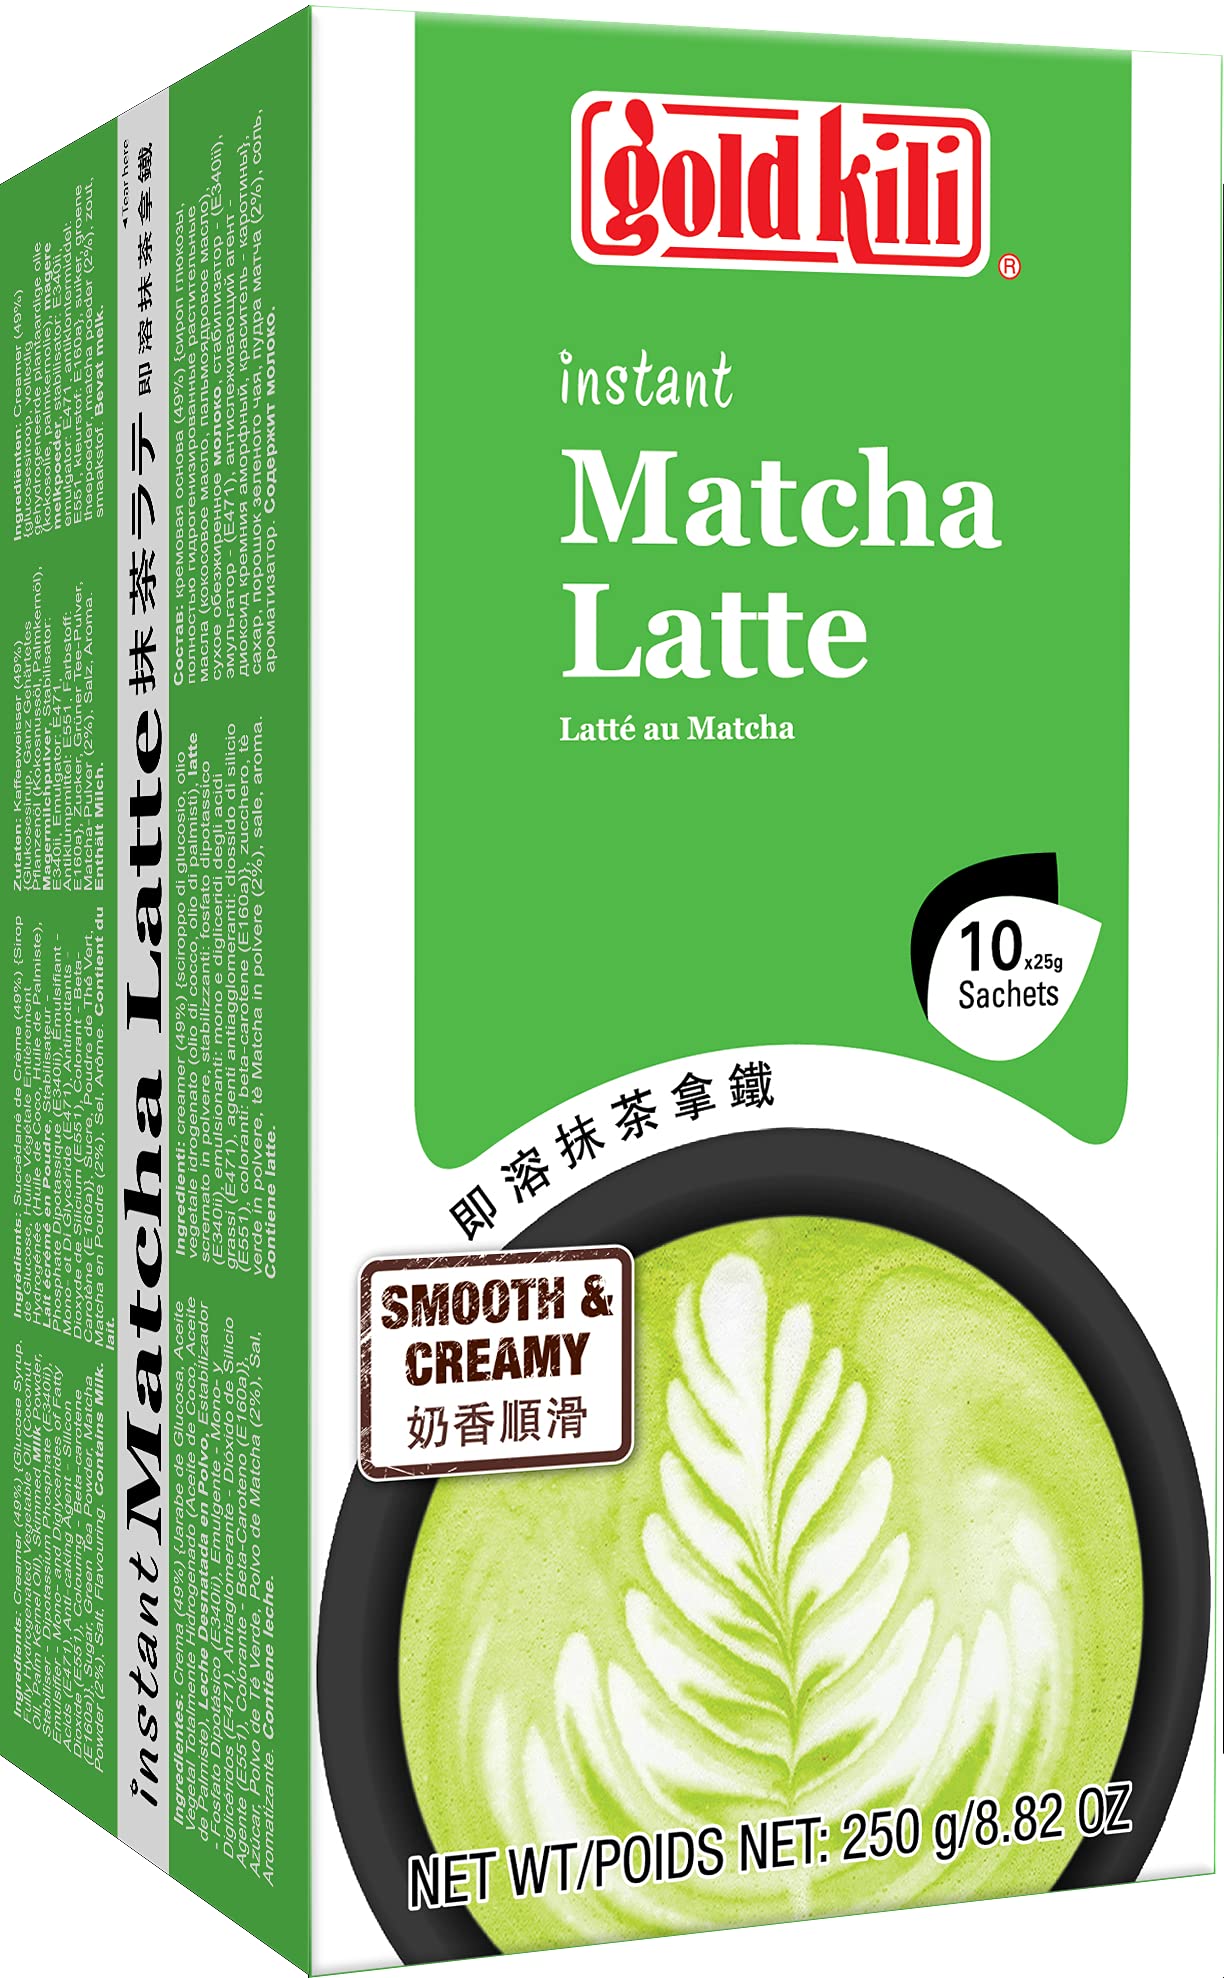 Gold kili instant matcha latte – instantanée thé vert matcha – 10x25g – 250g